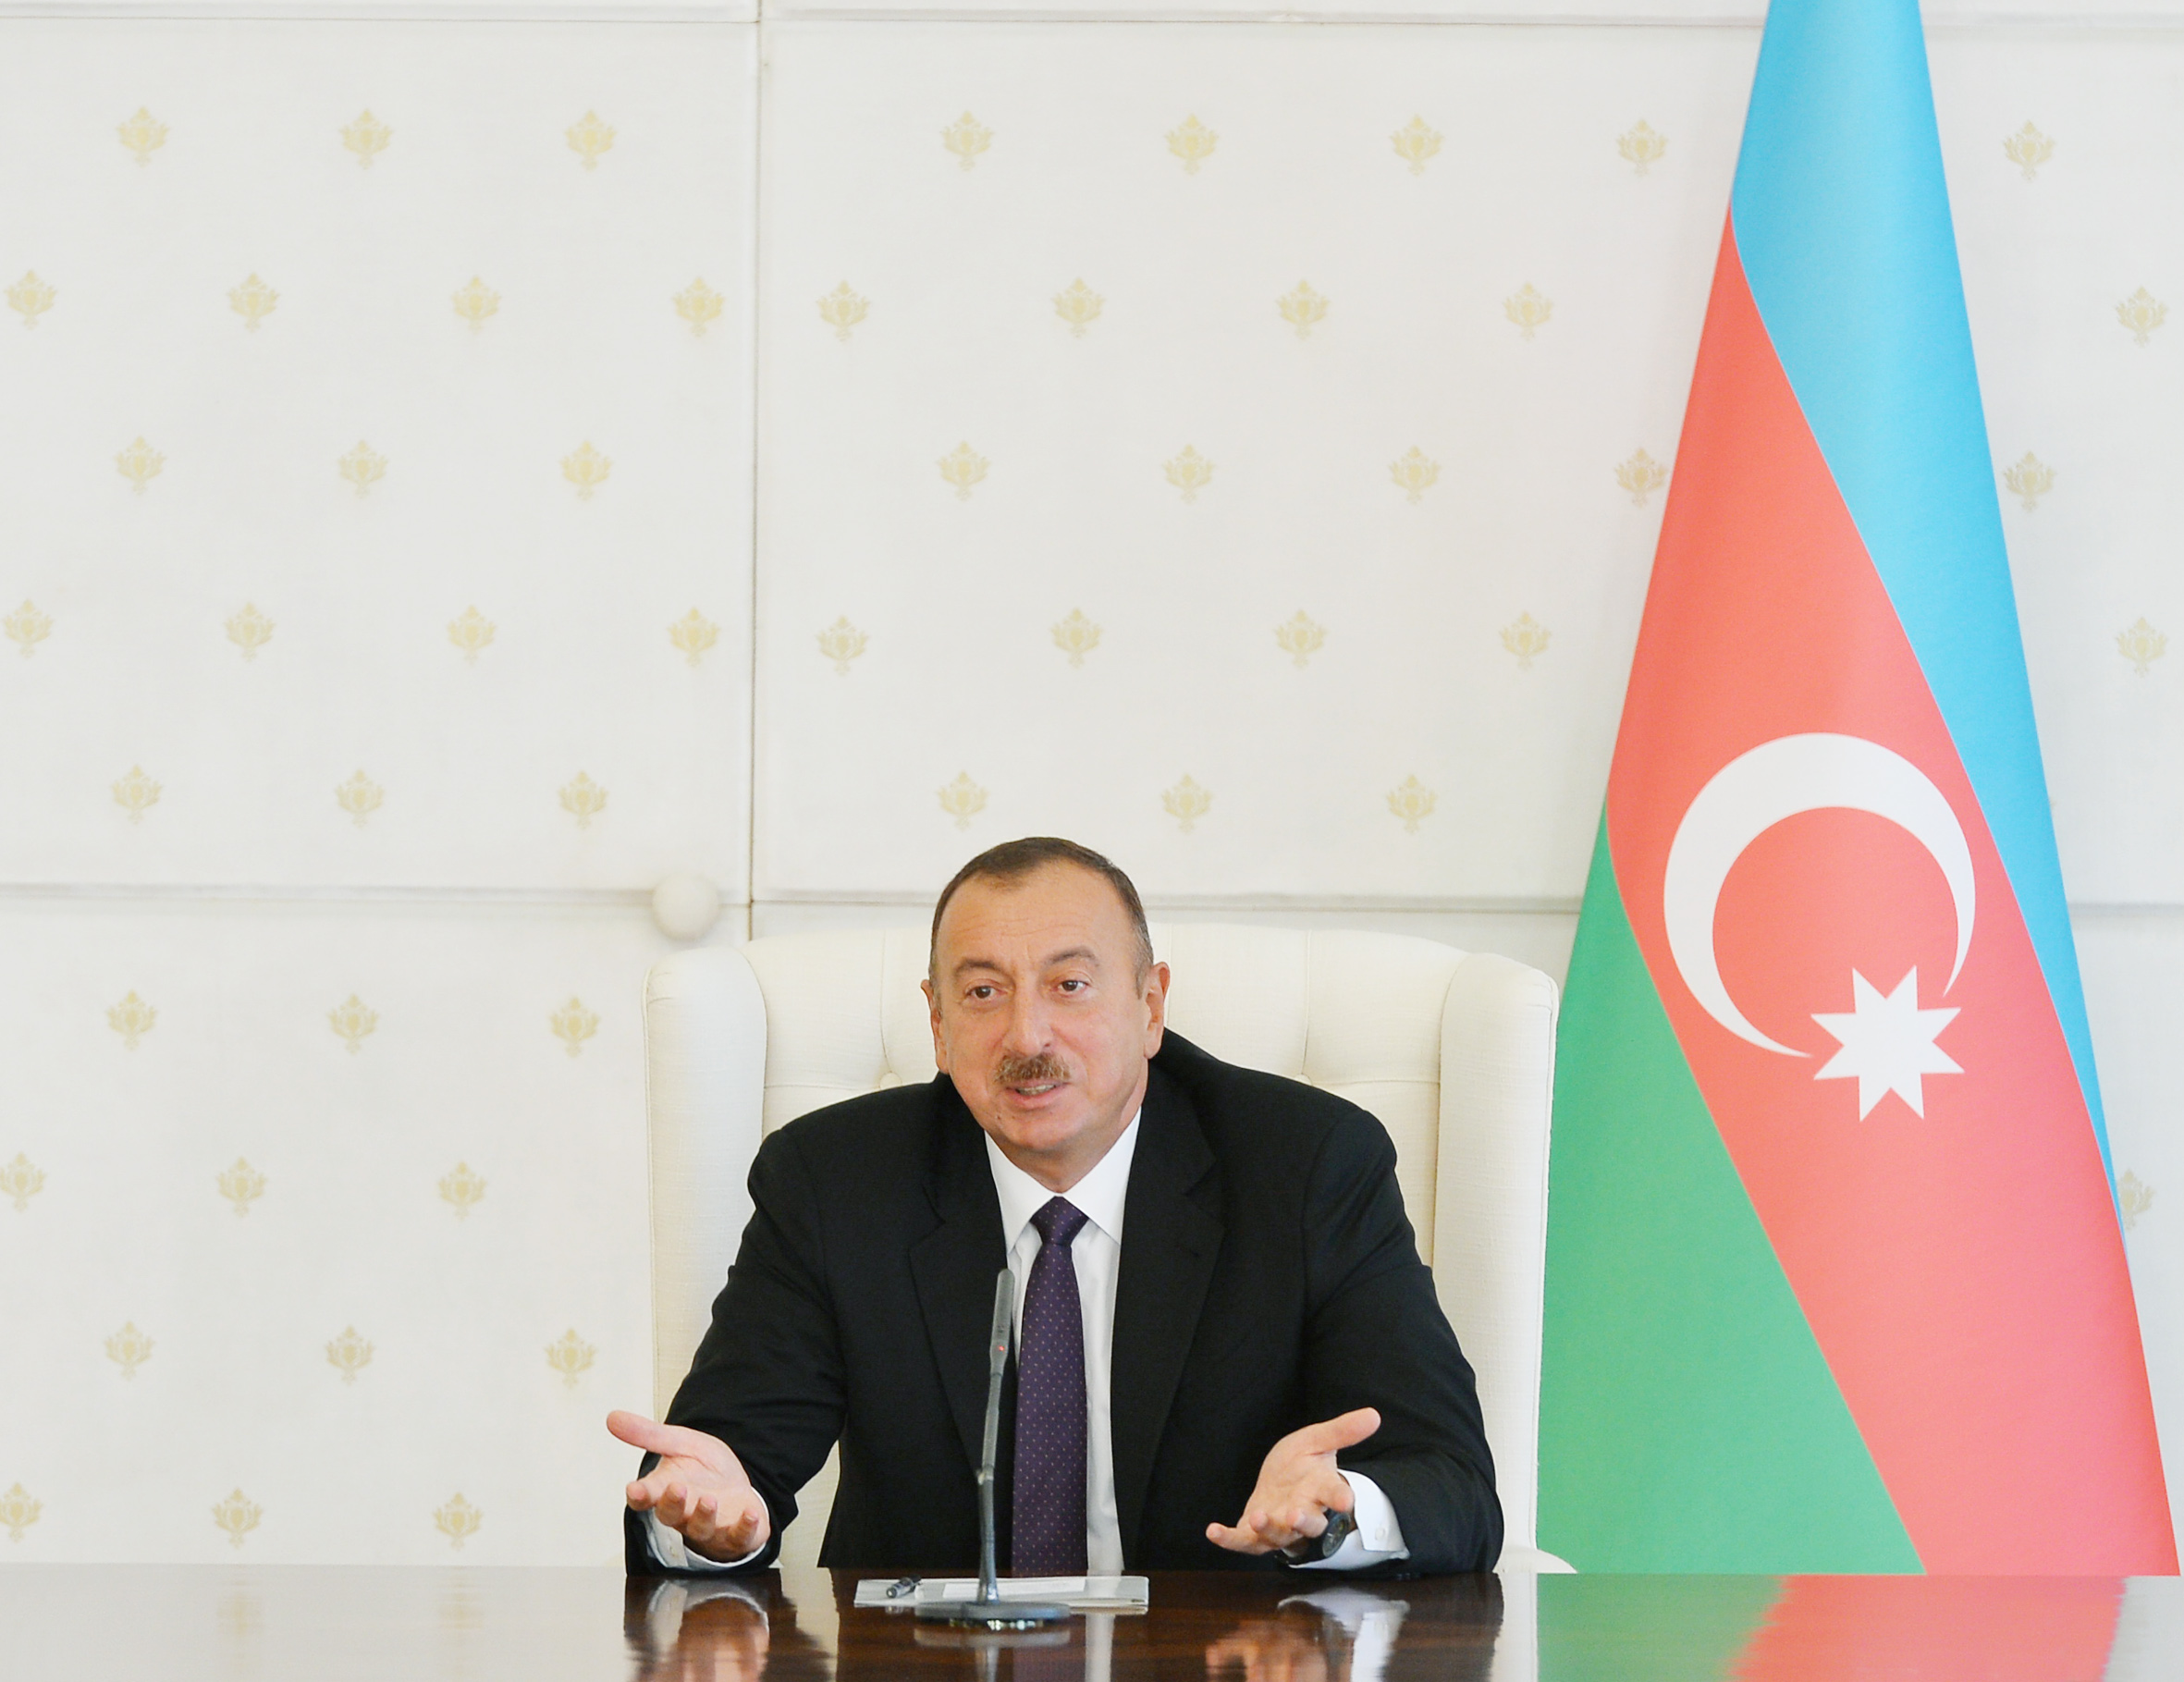 Ilham Aliyev портрет. Ilham Aliyev в очках. H.Aliyev. Азербайджан вступил